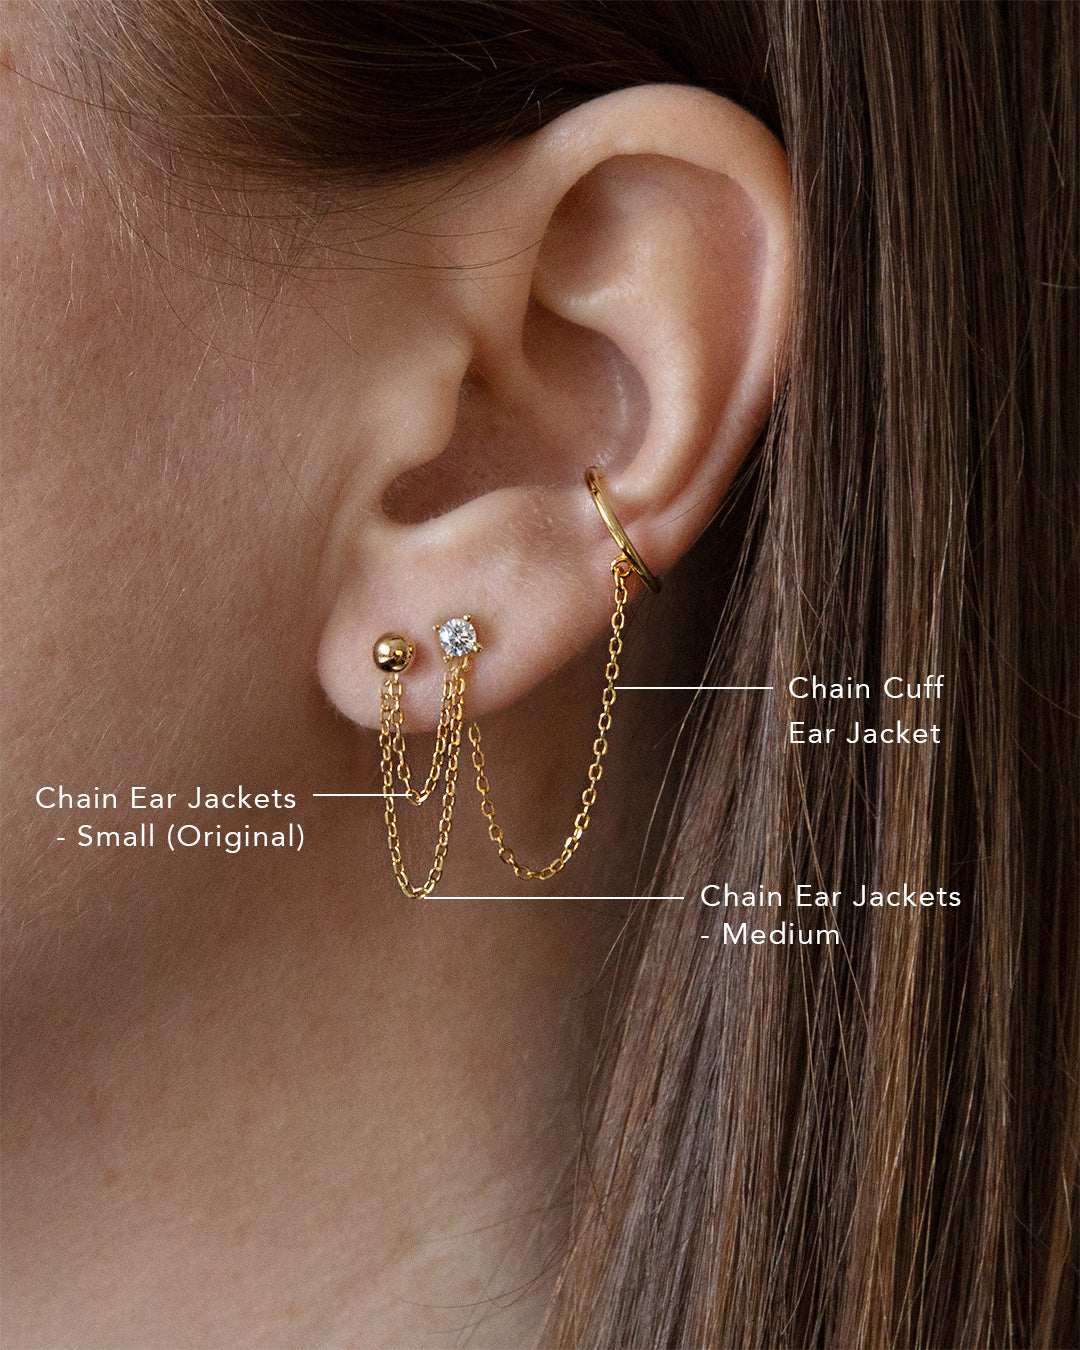 Chain Ear Jackets (Medium)